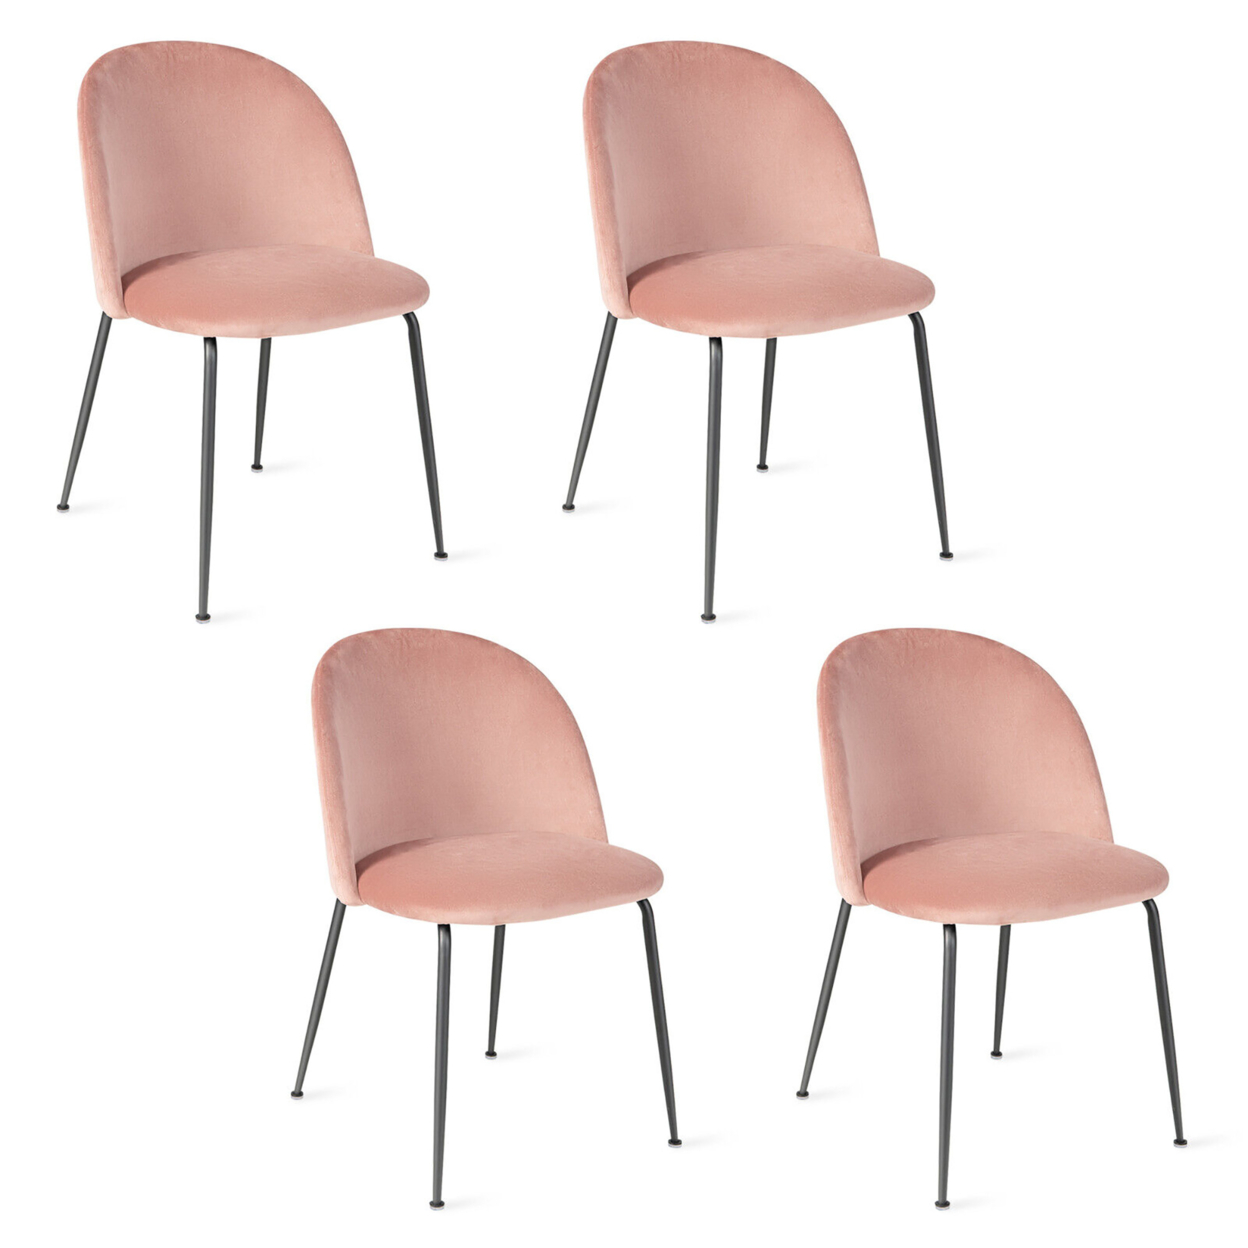 Dining Chair Set Of 4 Upholstered Velvet Chair Set W/ Metal Base For Living Room - Pink